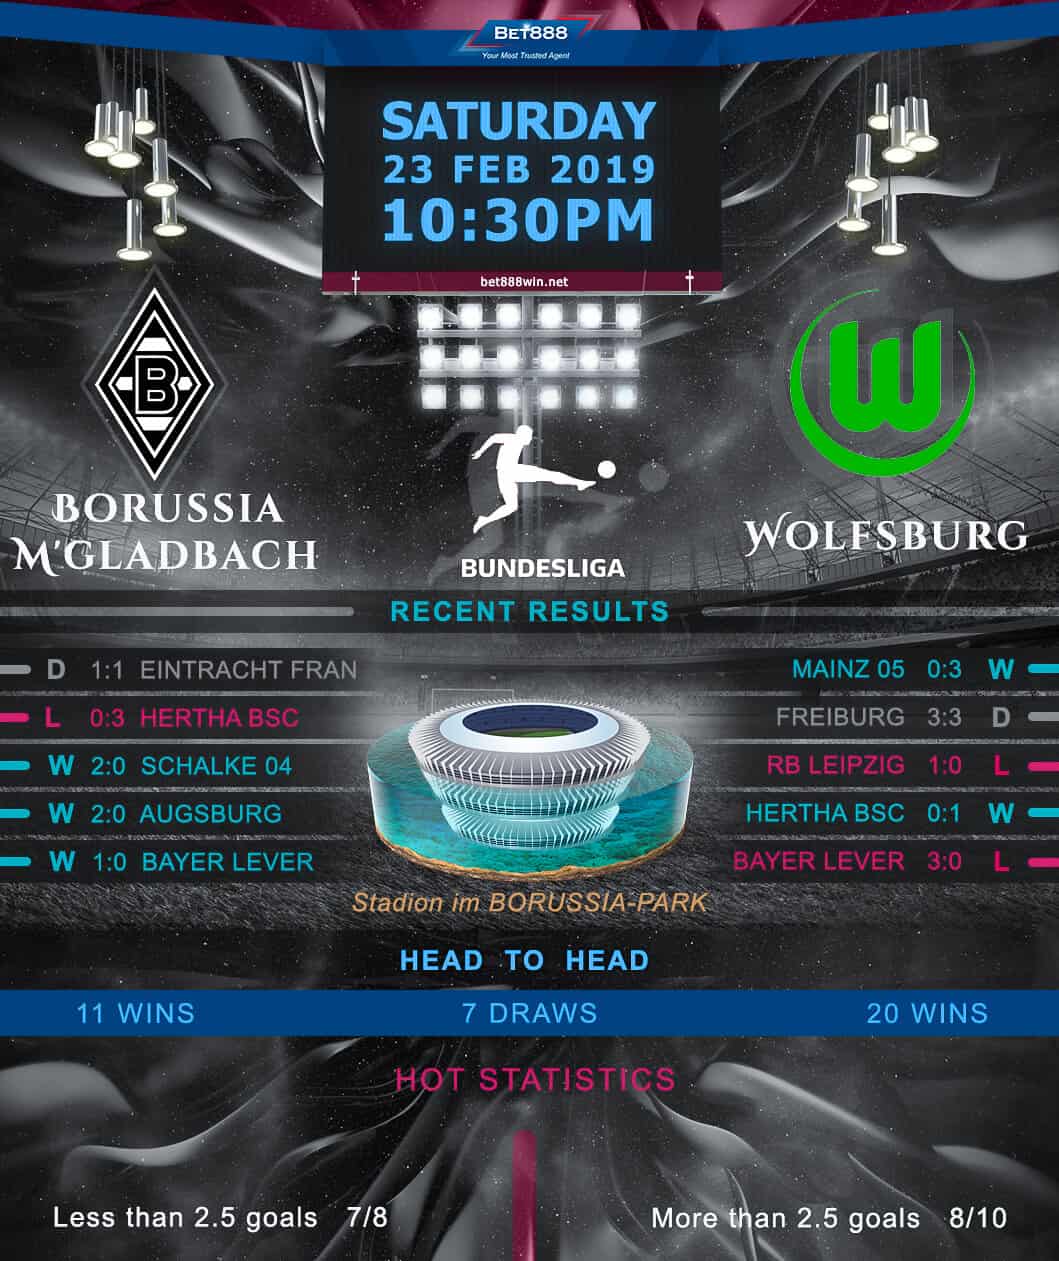 Borussia Monchengladbach vs Wolfsburg 23/02/19